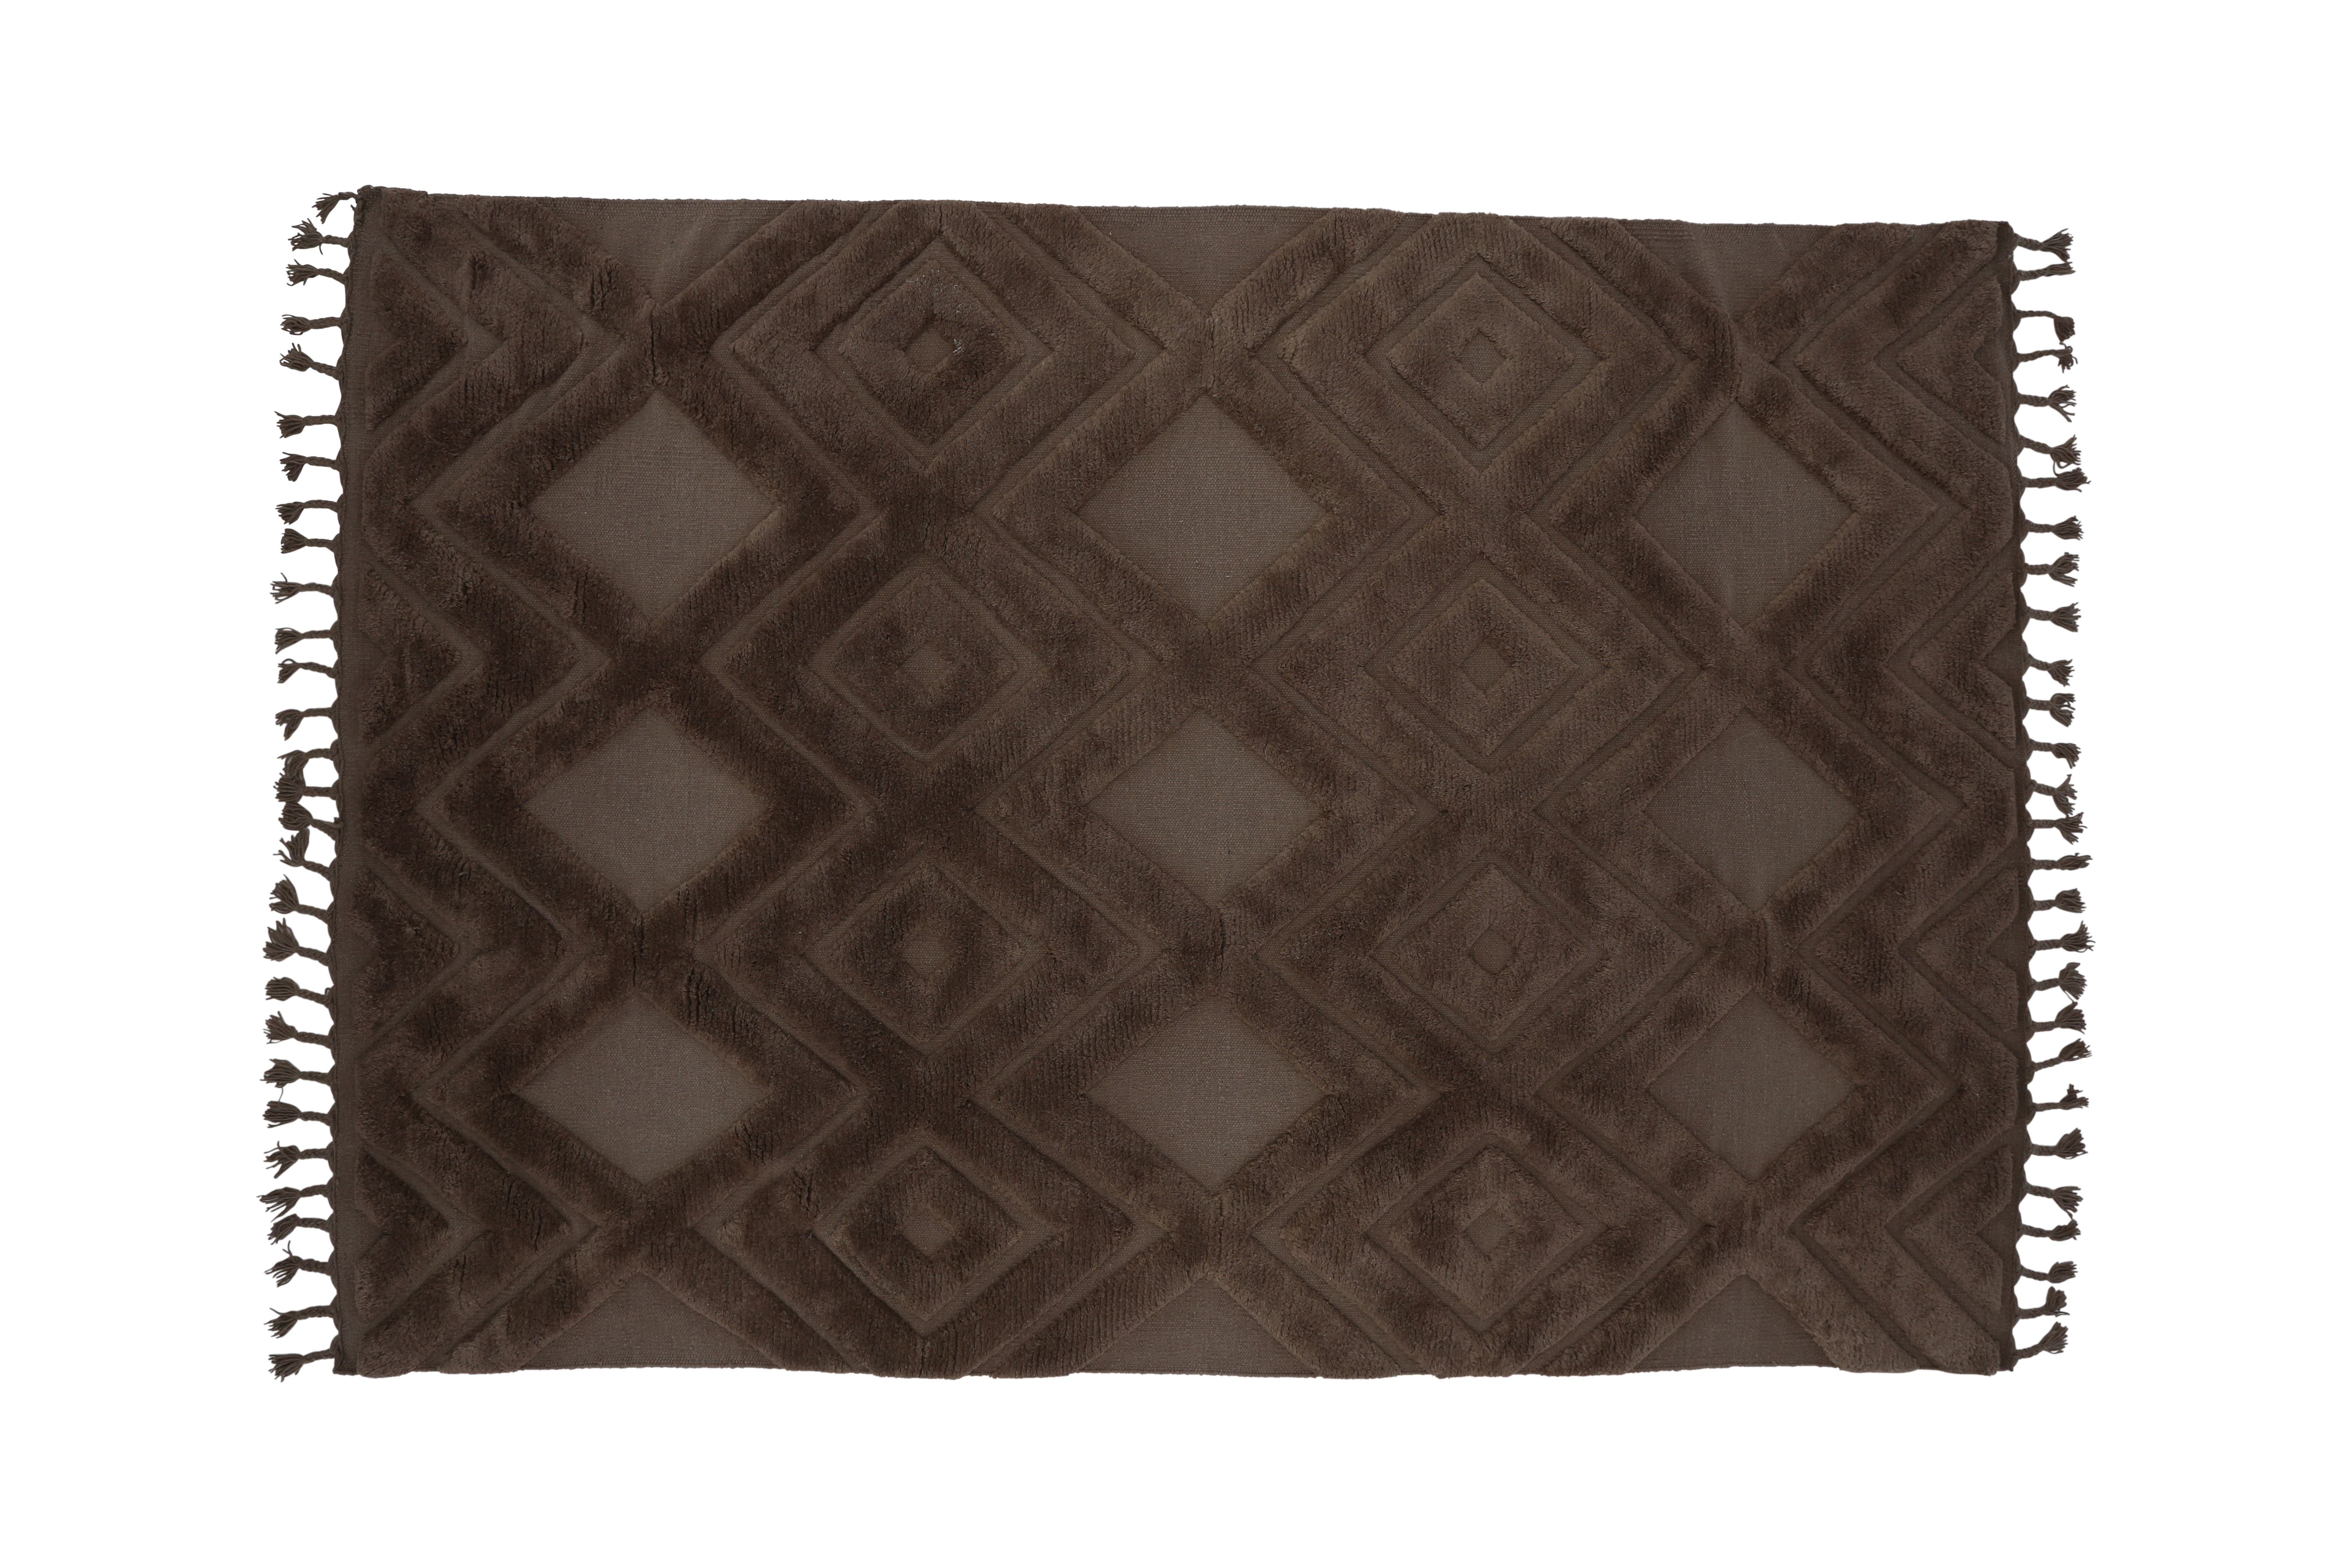 Billede af VIND COLLECTION Dahliawool gulvtæppe, rektangulær - brun nougat uld (400x300)